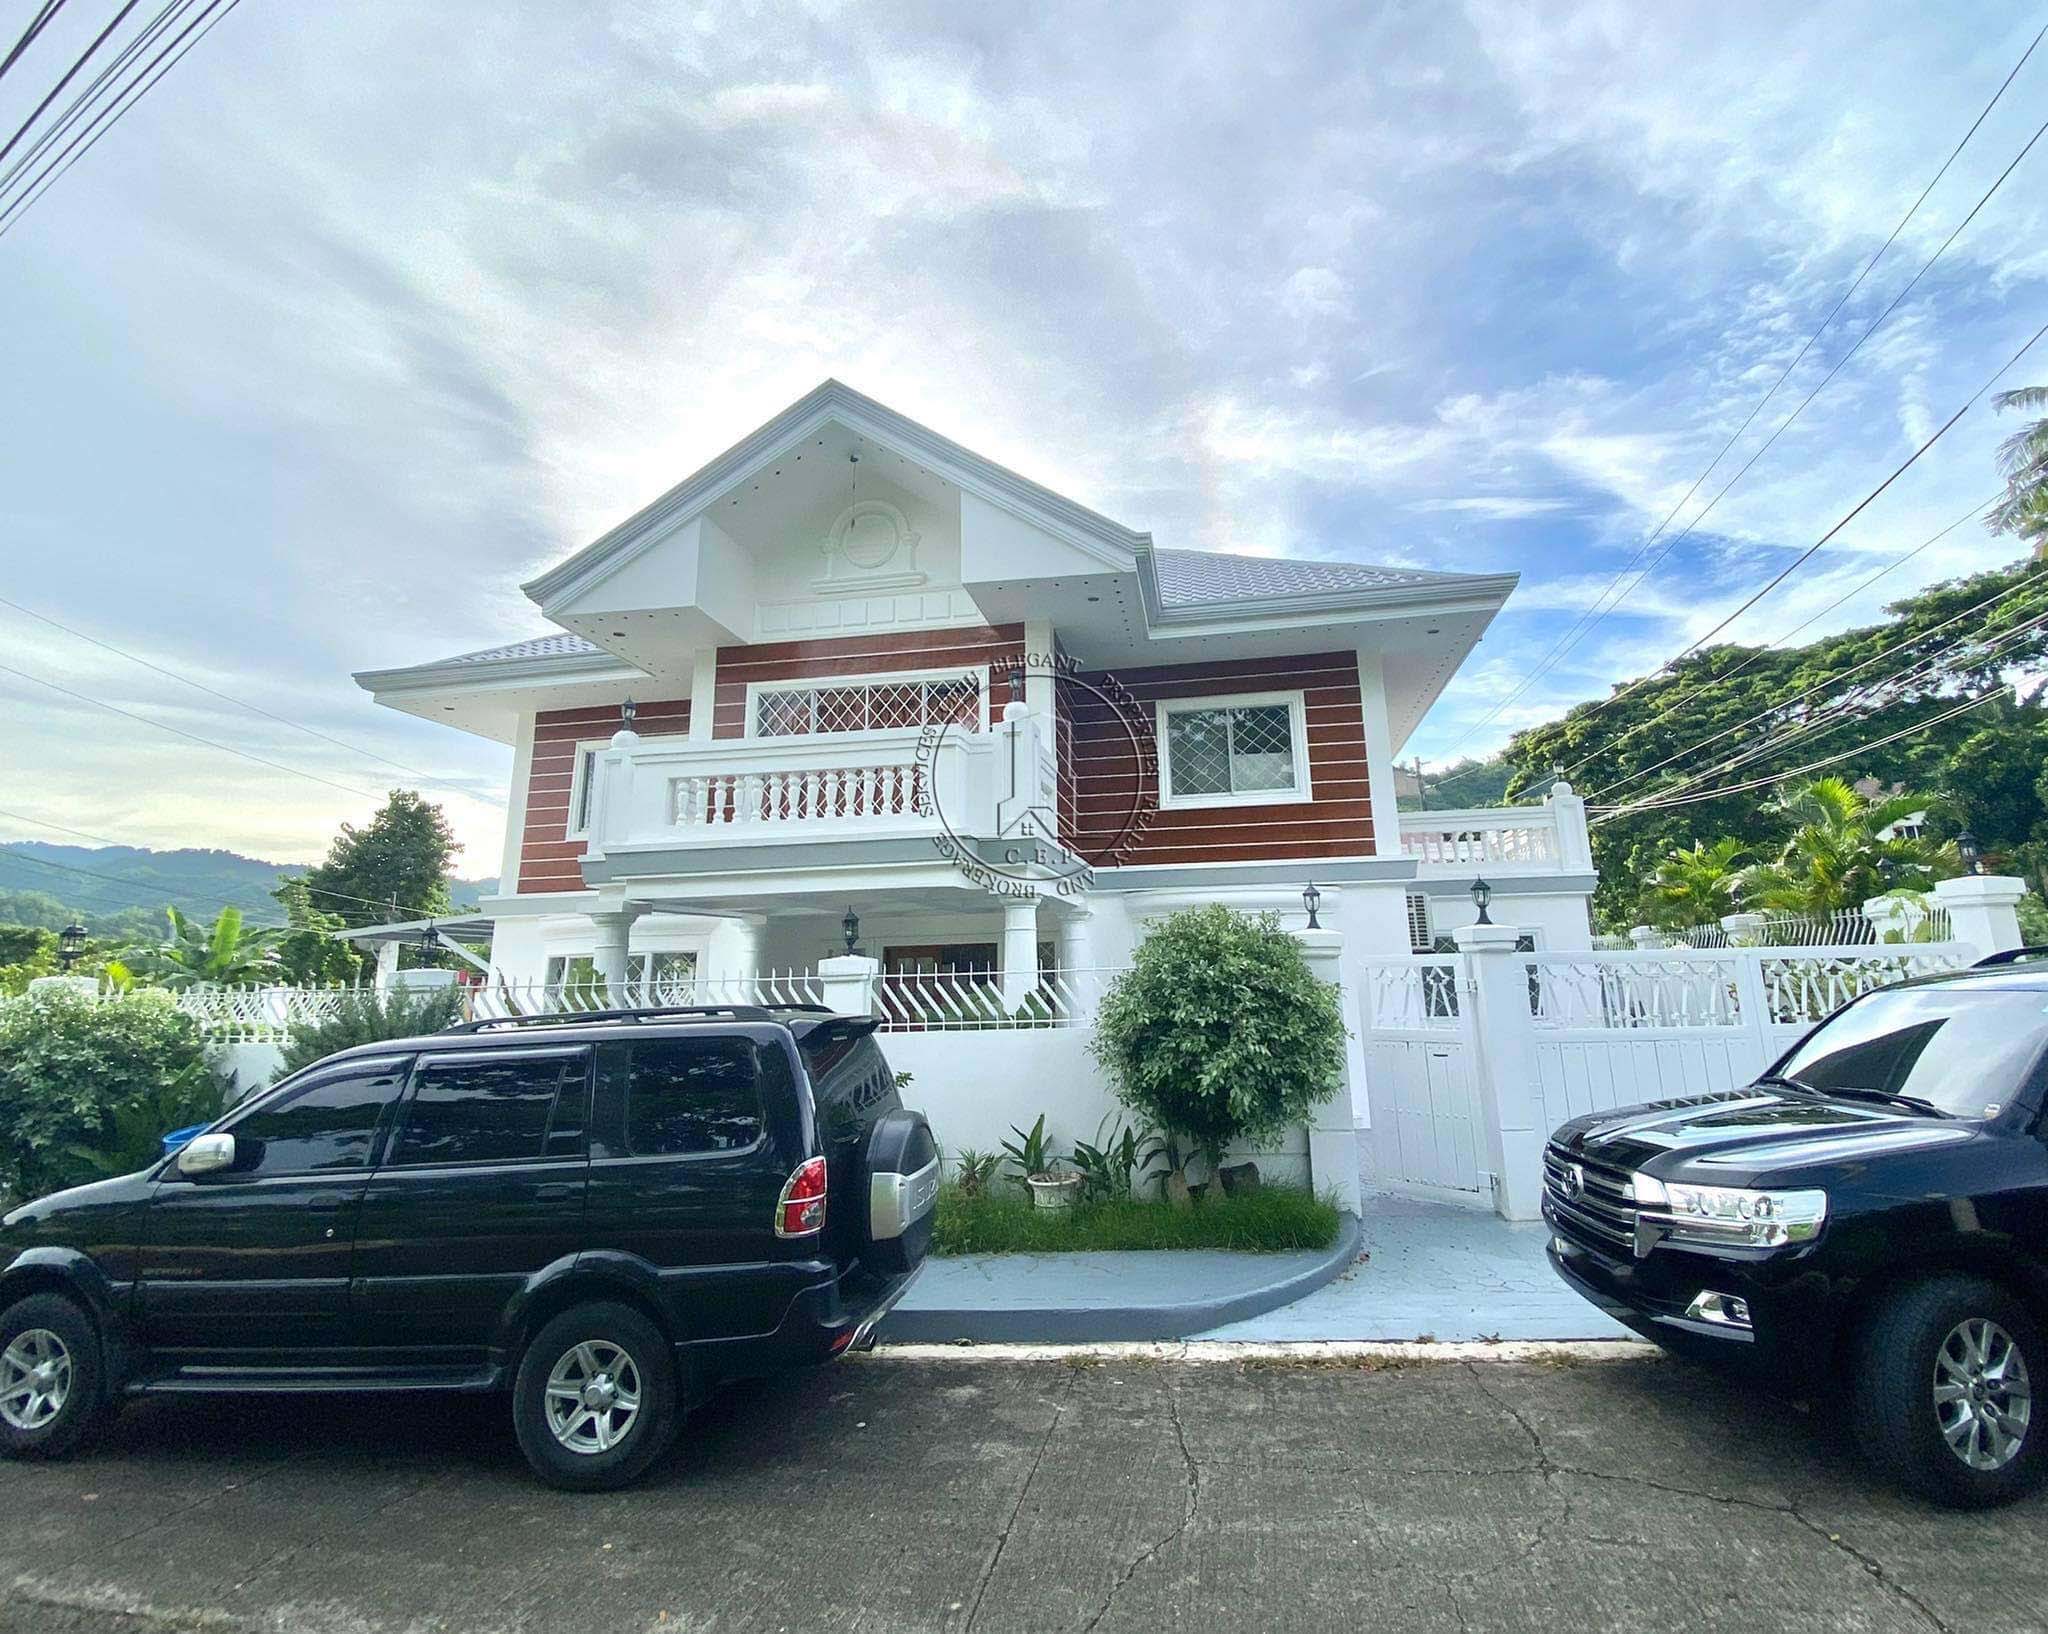 House and Lot for Sale in Pulangbato, Talamban Cebu City